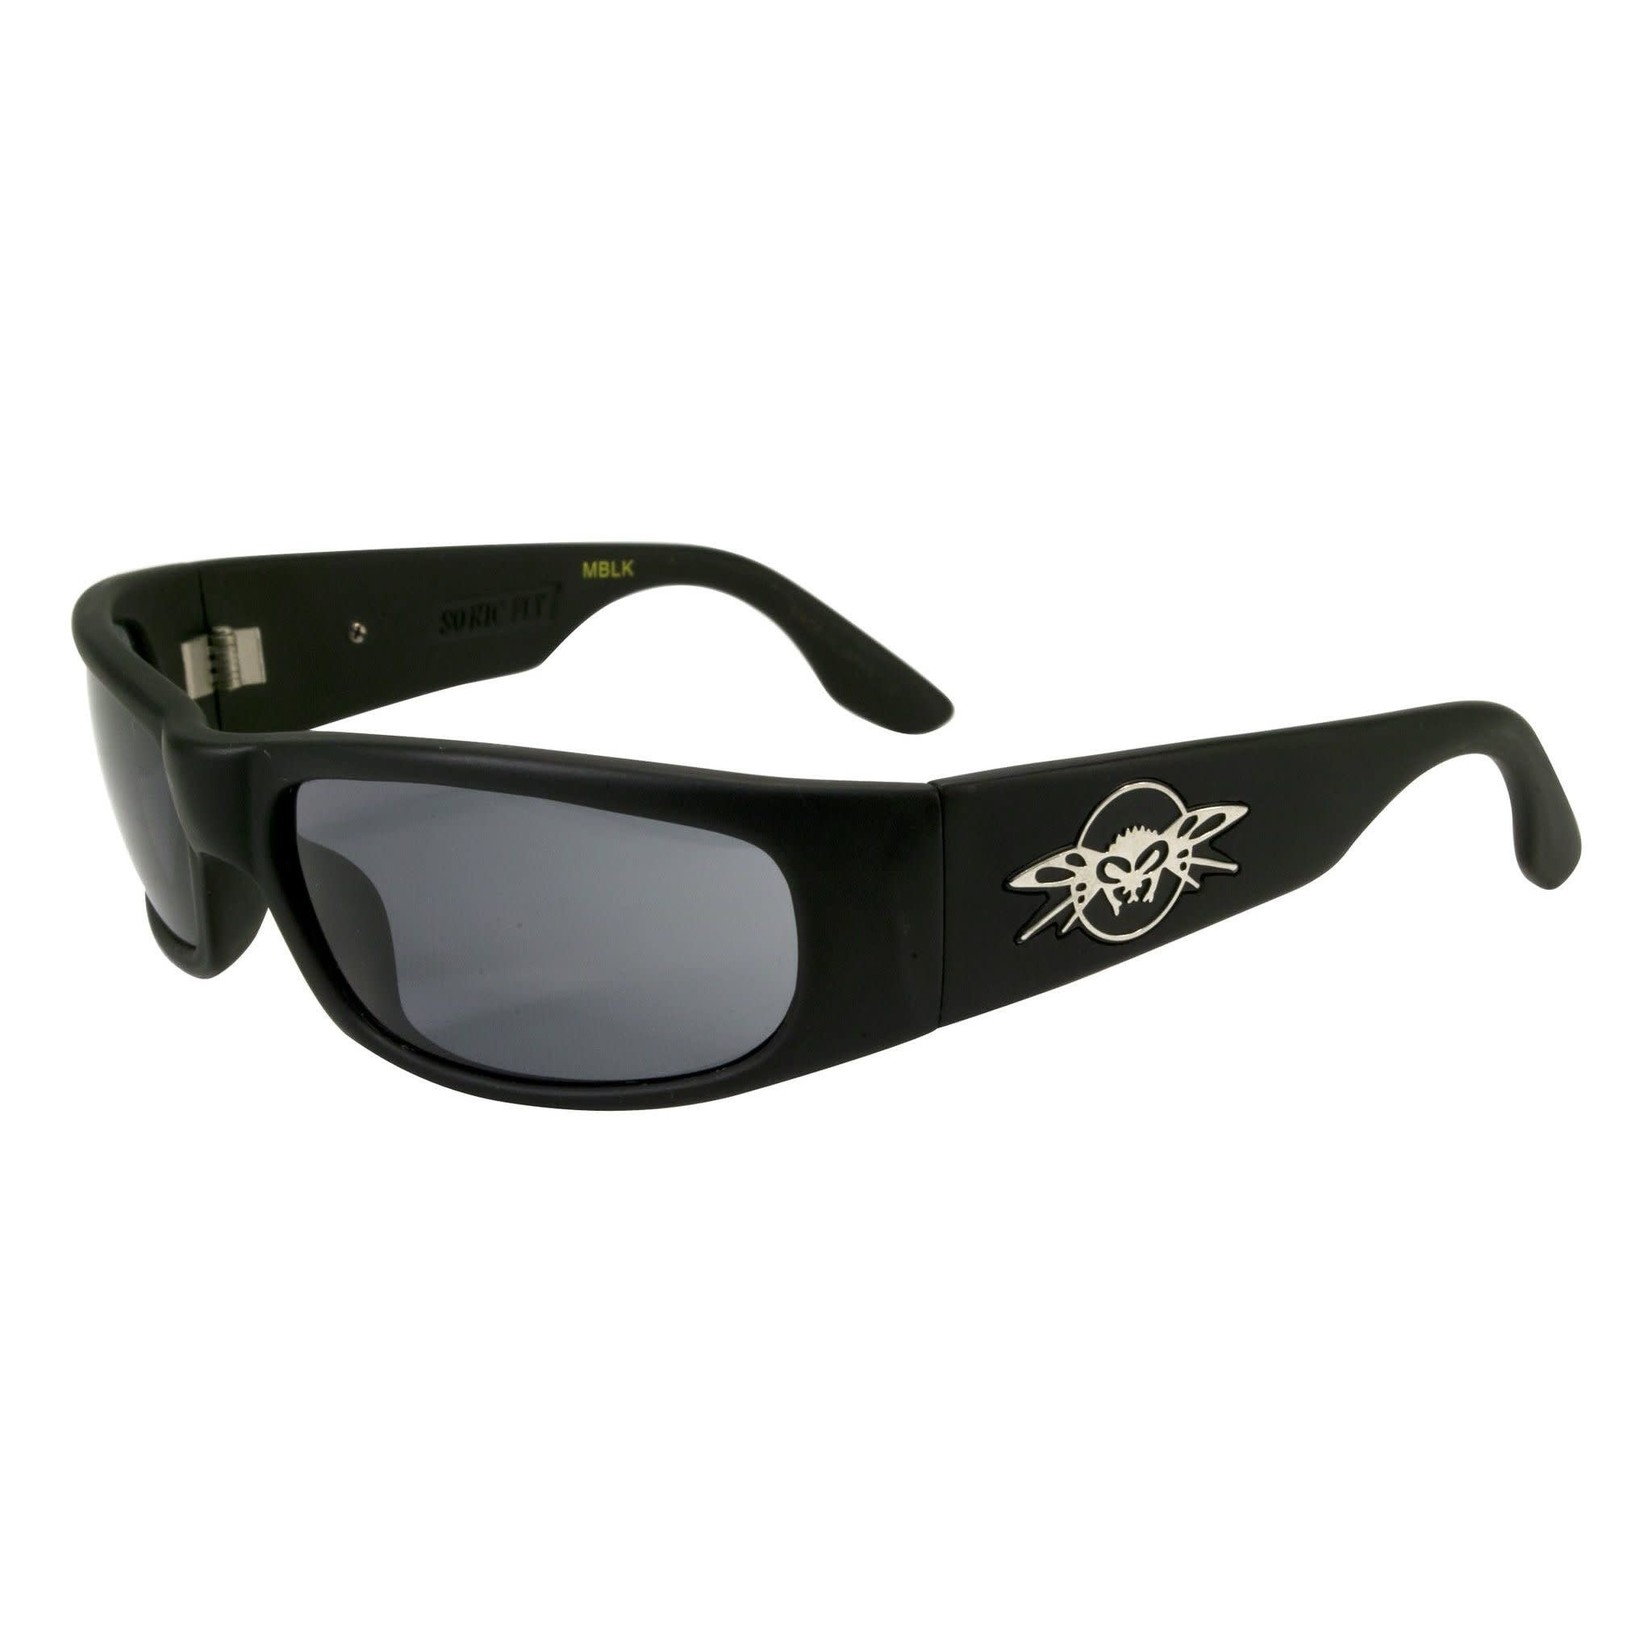 Black Flys Black Flys Sonic Fly Polarized Sunglasses - Matte Black/Smoke Lens